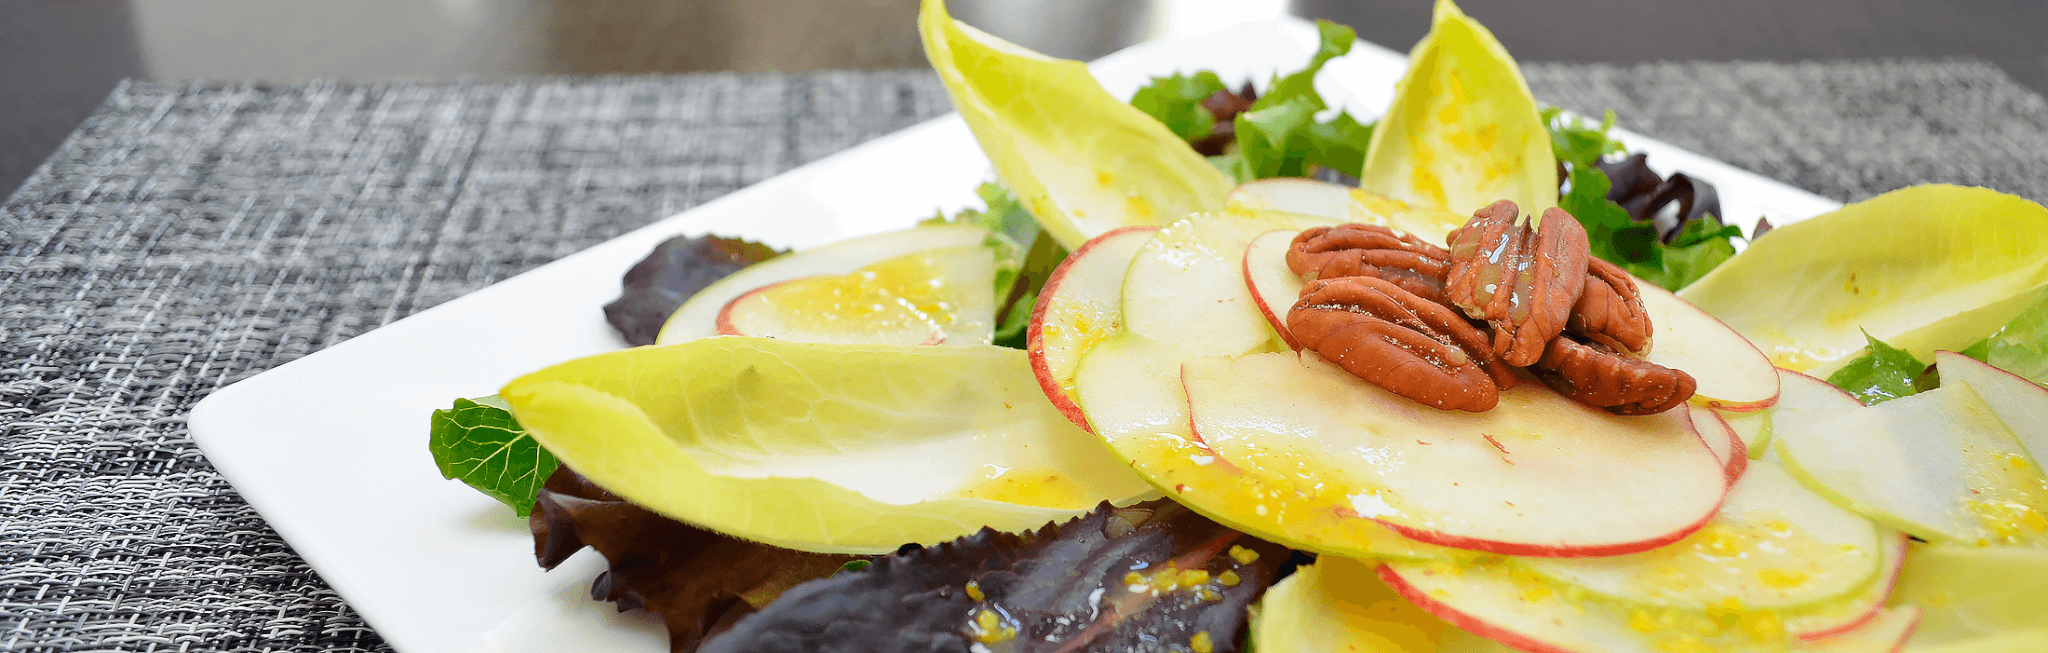 Apple and Endive Salad With Orange Dressing